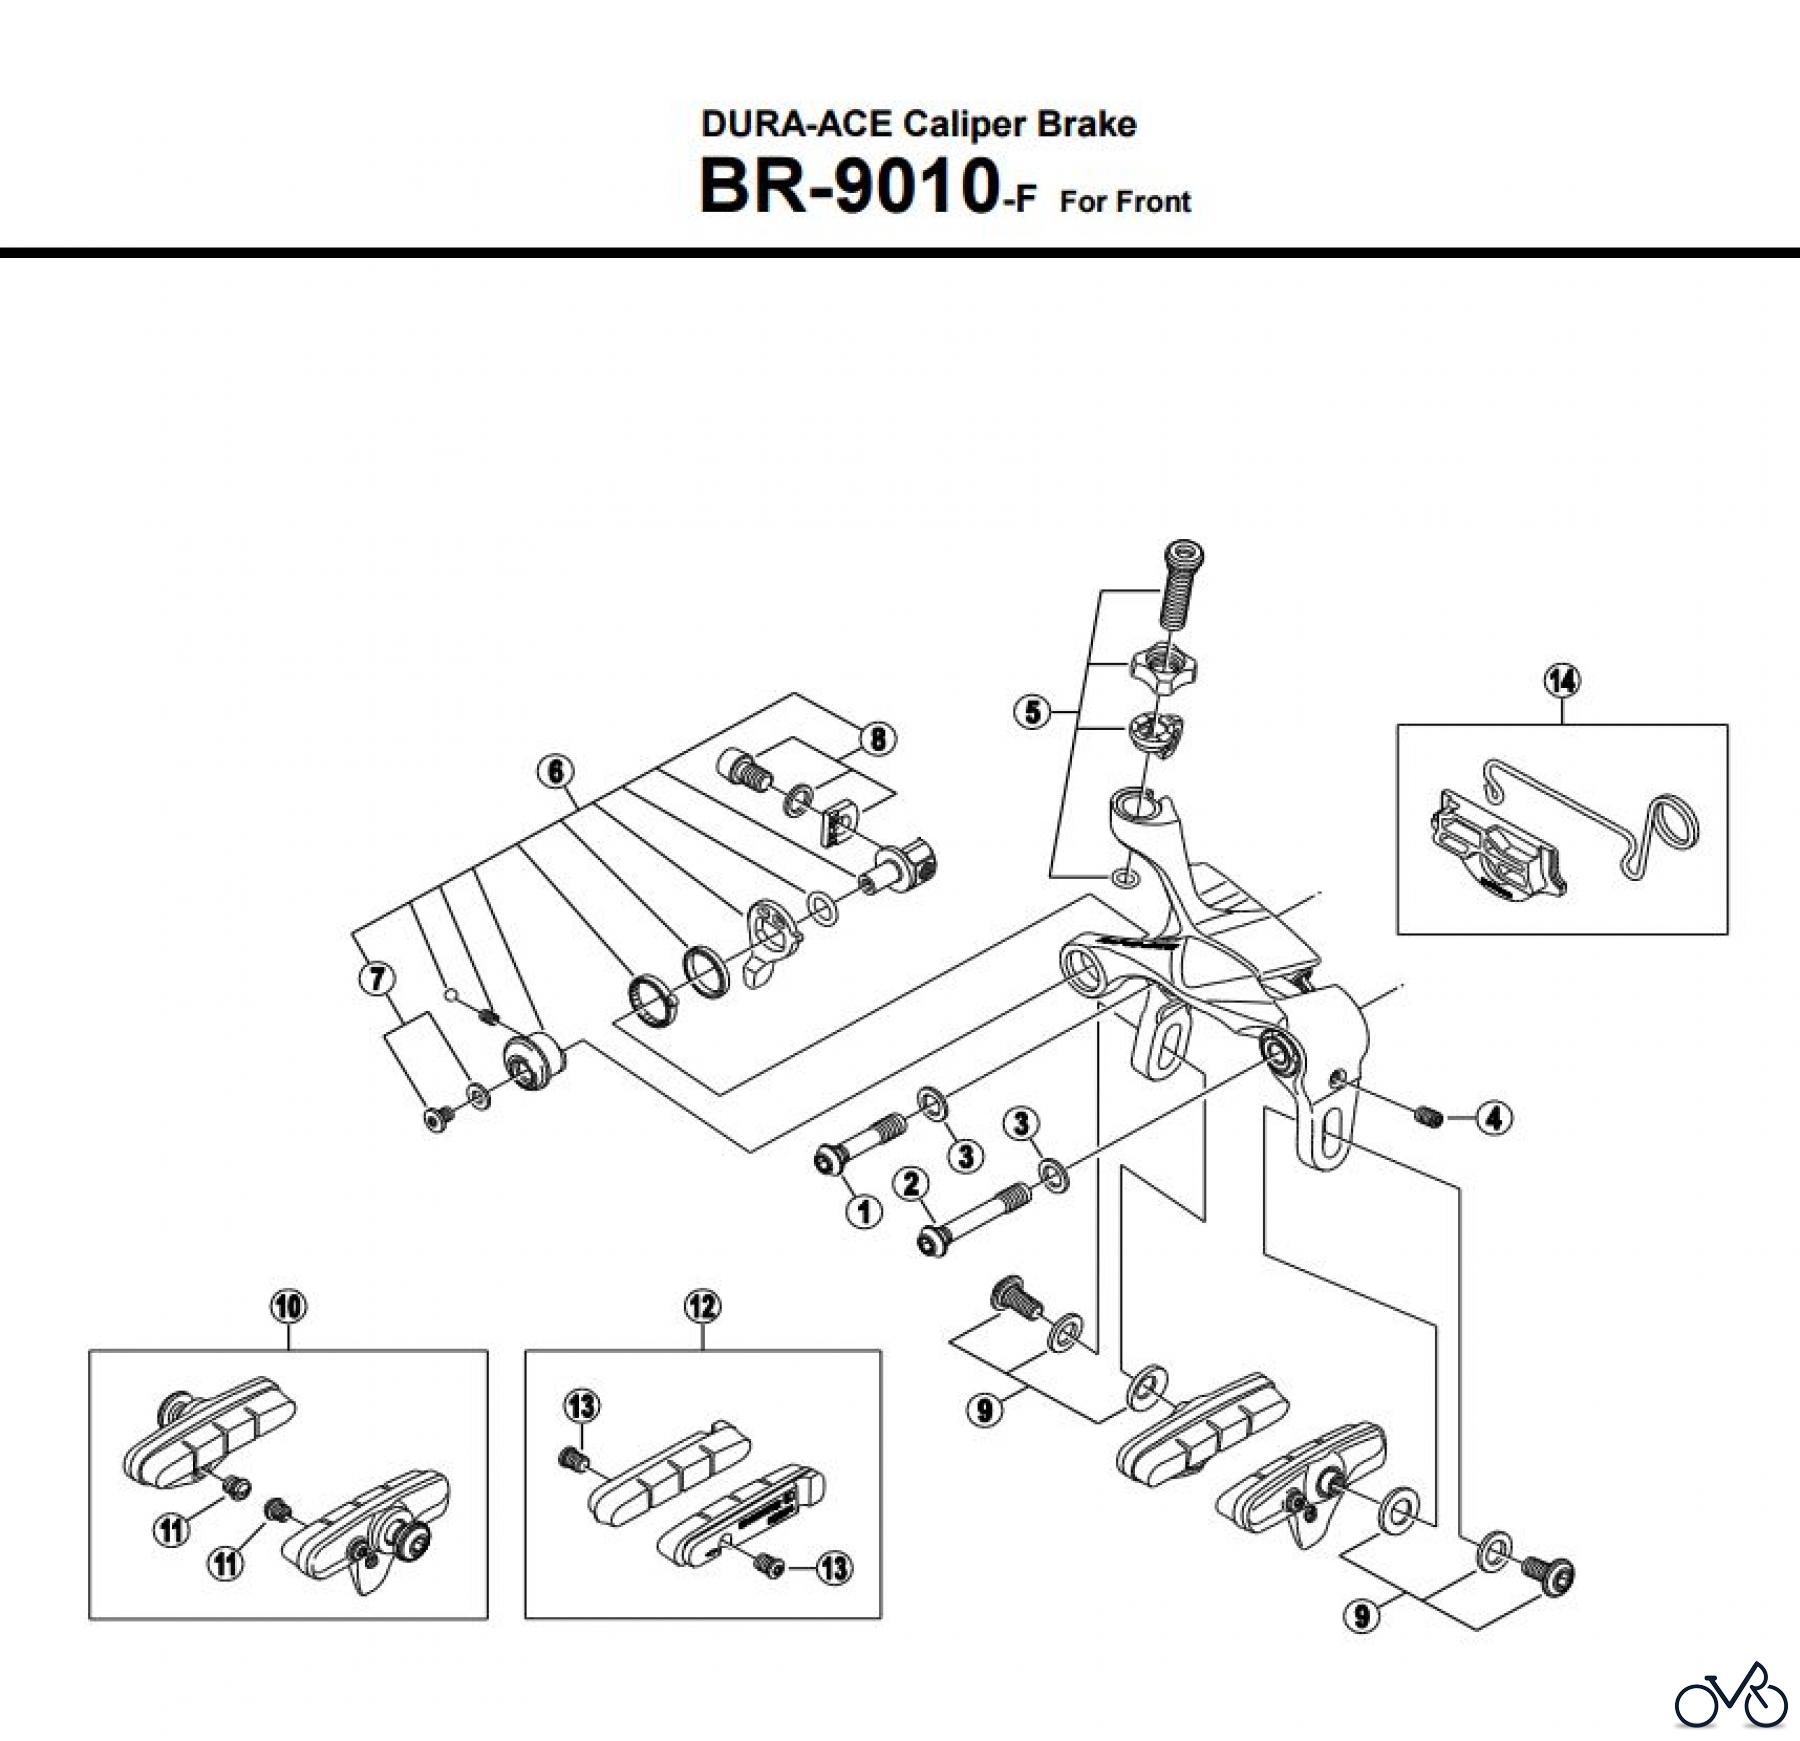  Shimano BR Brake - Bremse BR-9010-F -3461B DURA-ACE Caliper Brake For Front